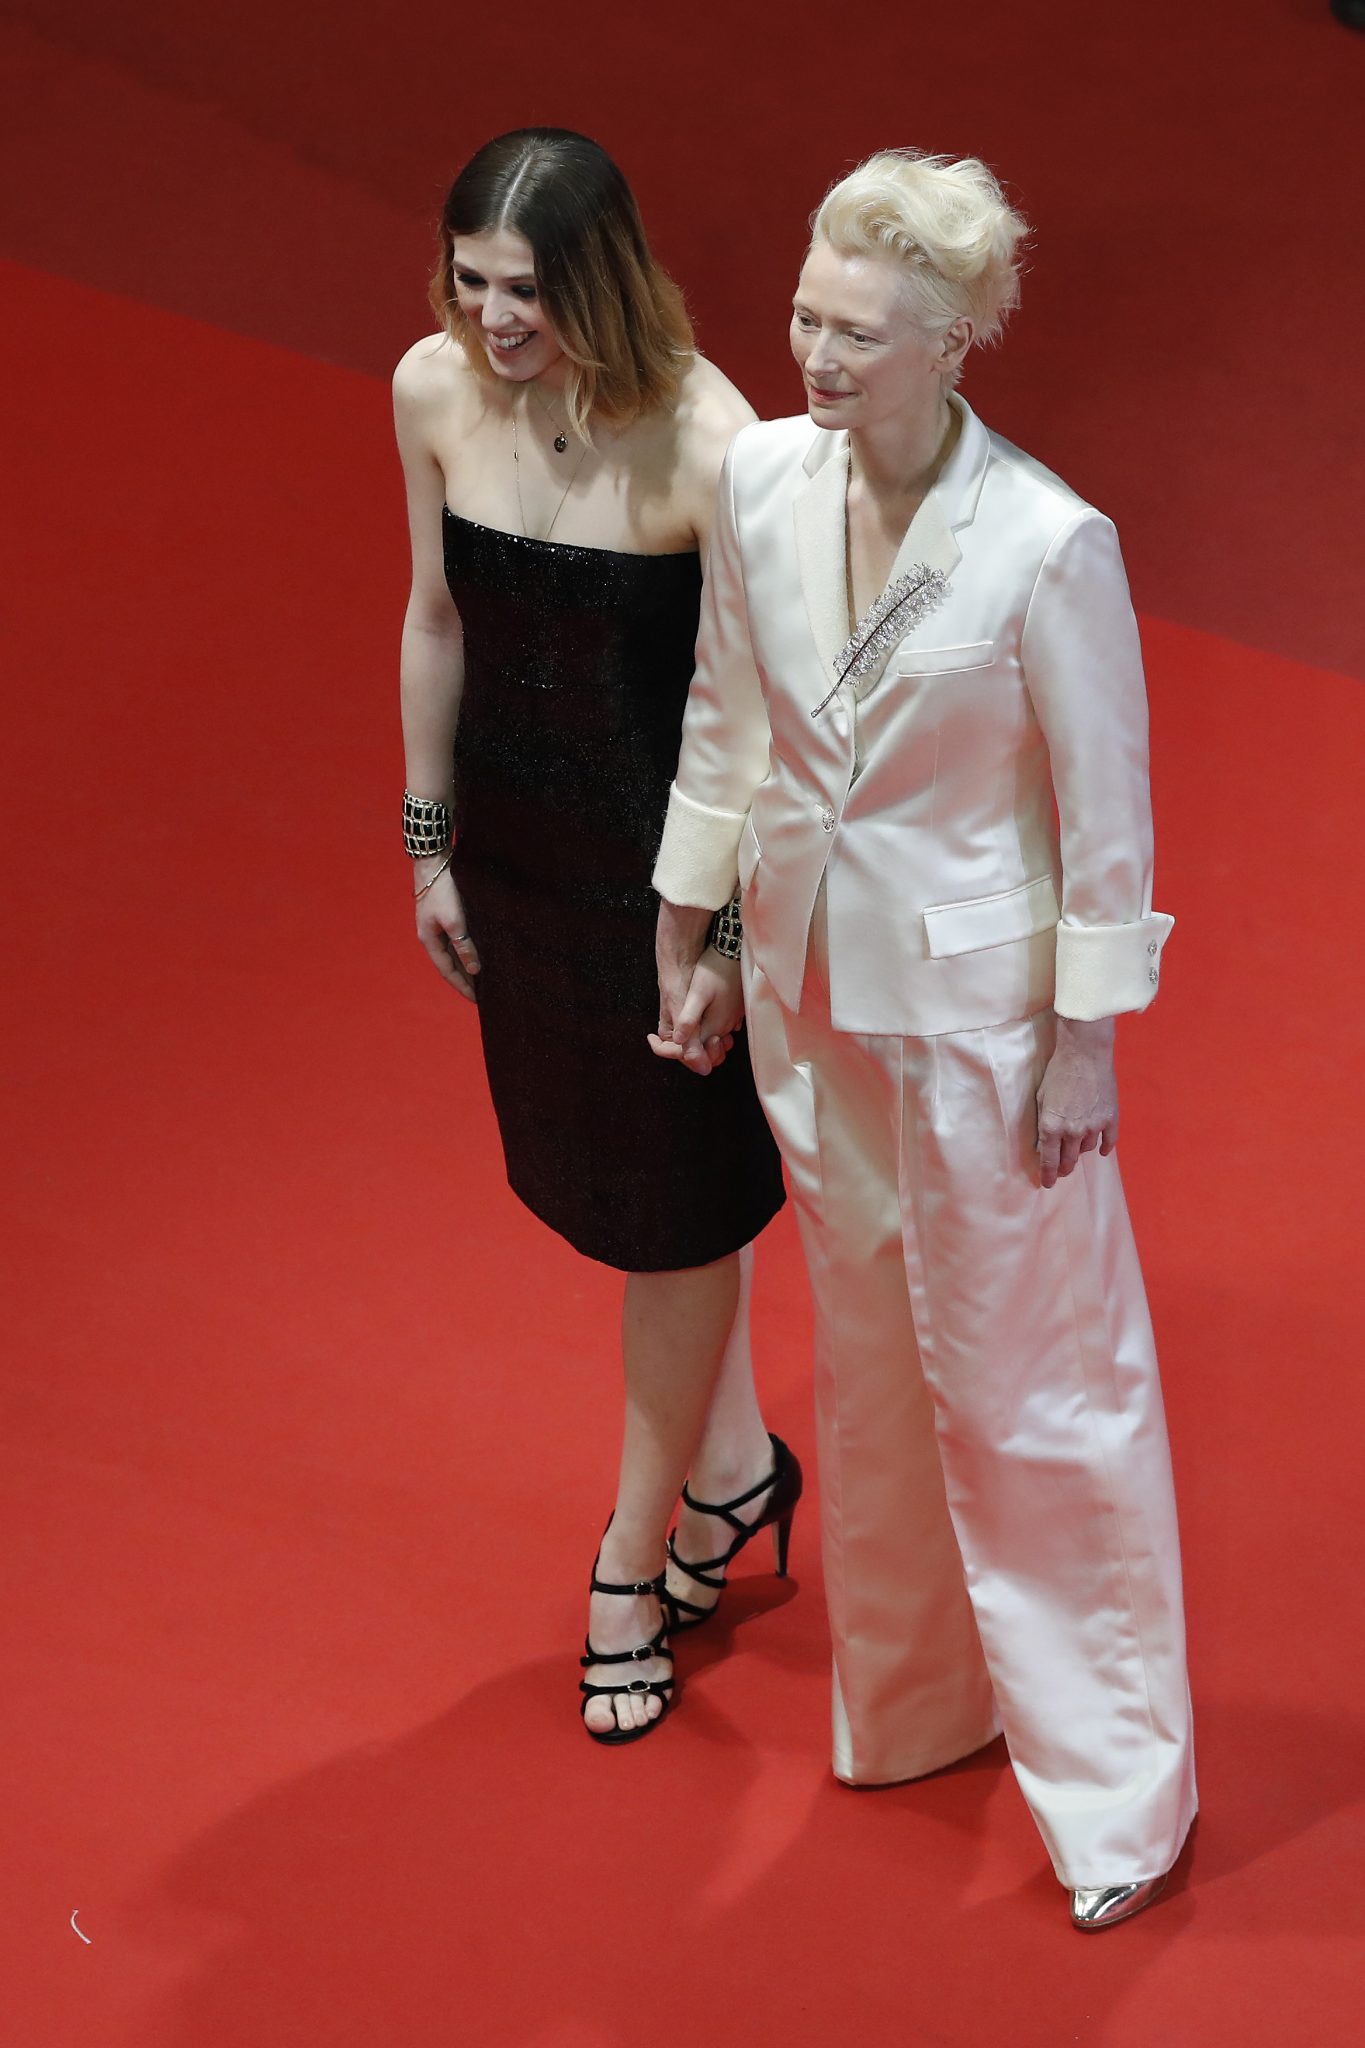 CHANEL Cannes 2019 Honor Swinton Byrne and Tilda Swinton Esprit de Gabrielle espritdegabrielle.com